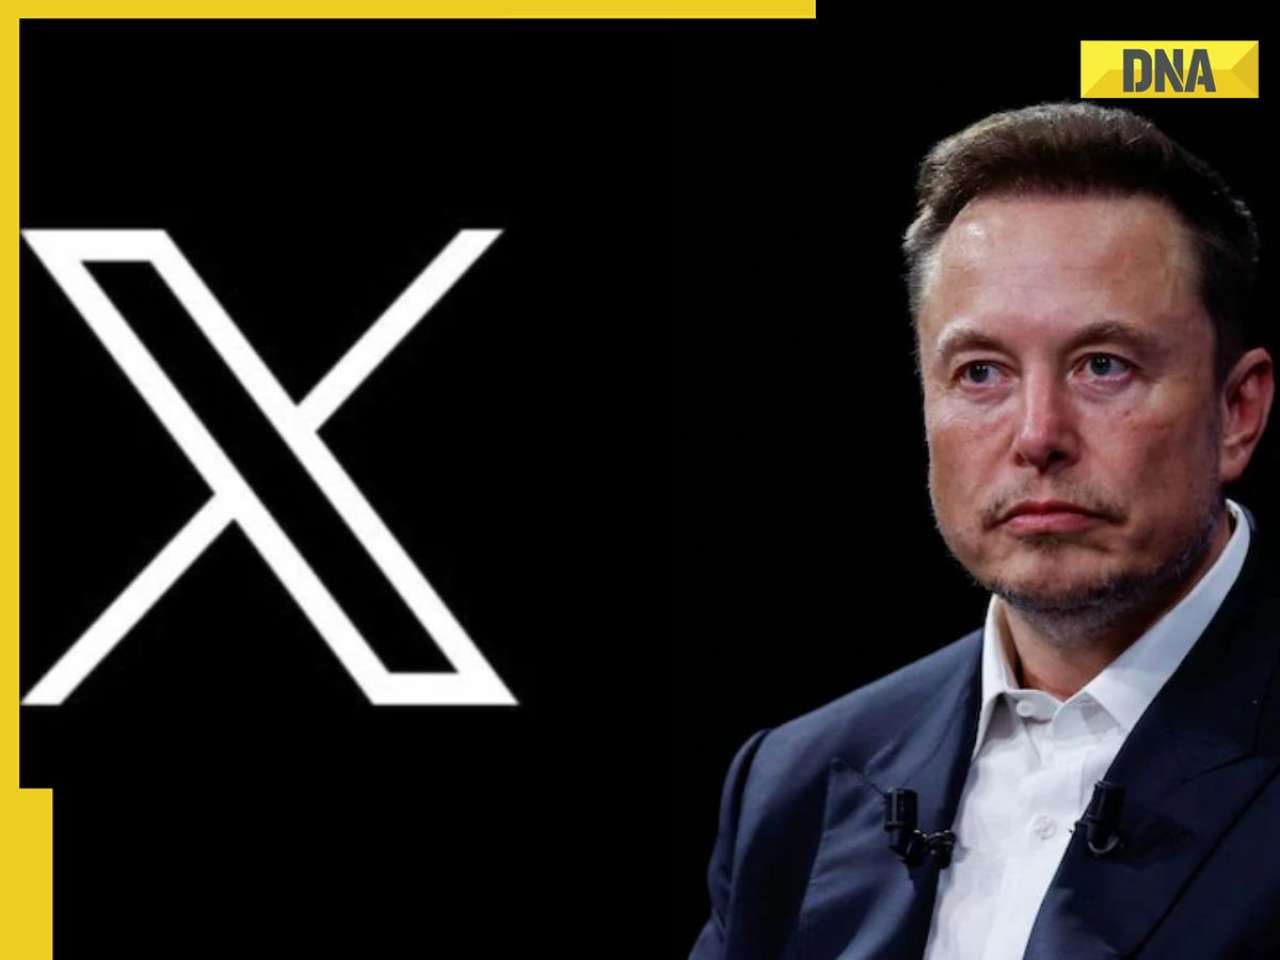 Twitter is now X.com officially, Elon Musk tweets